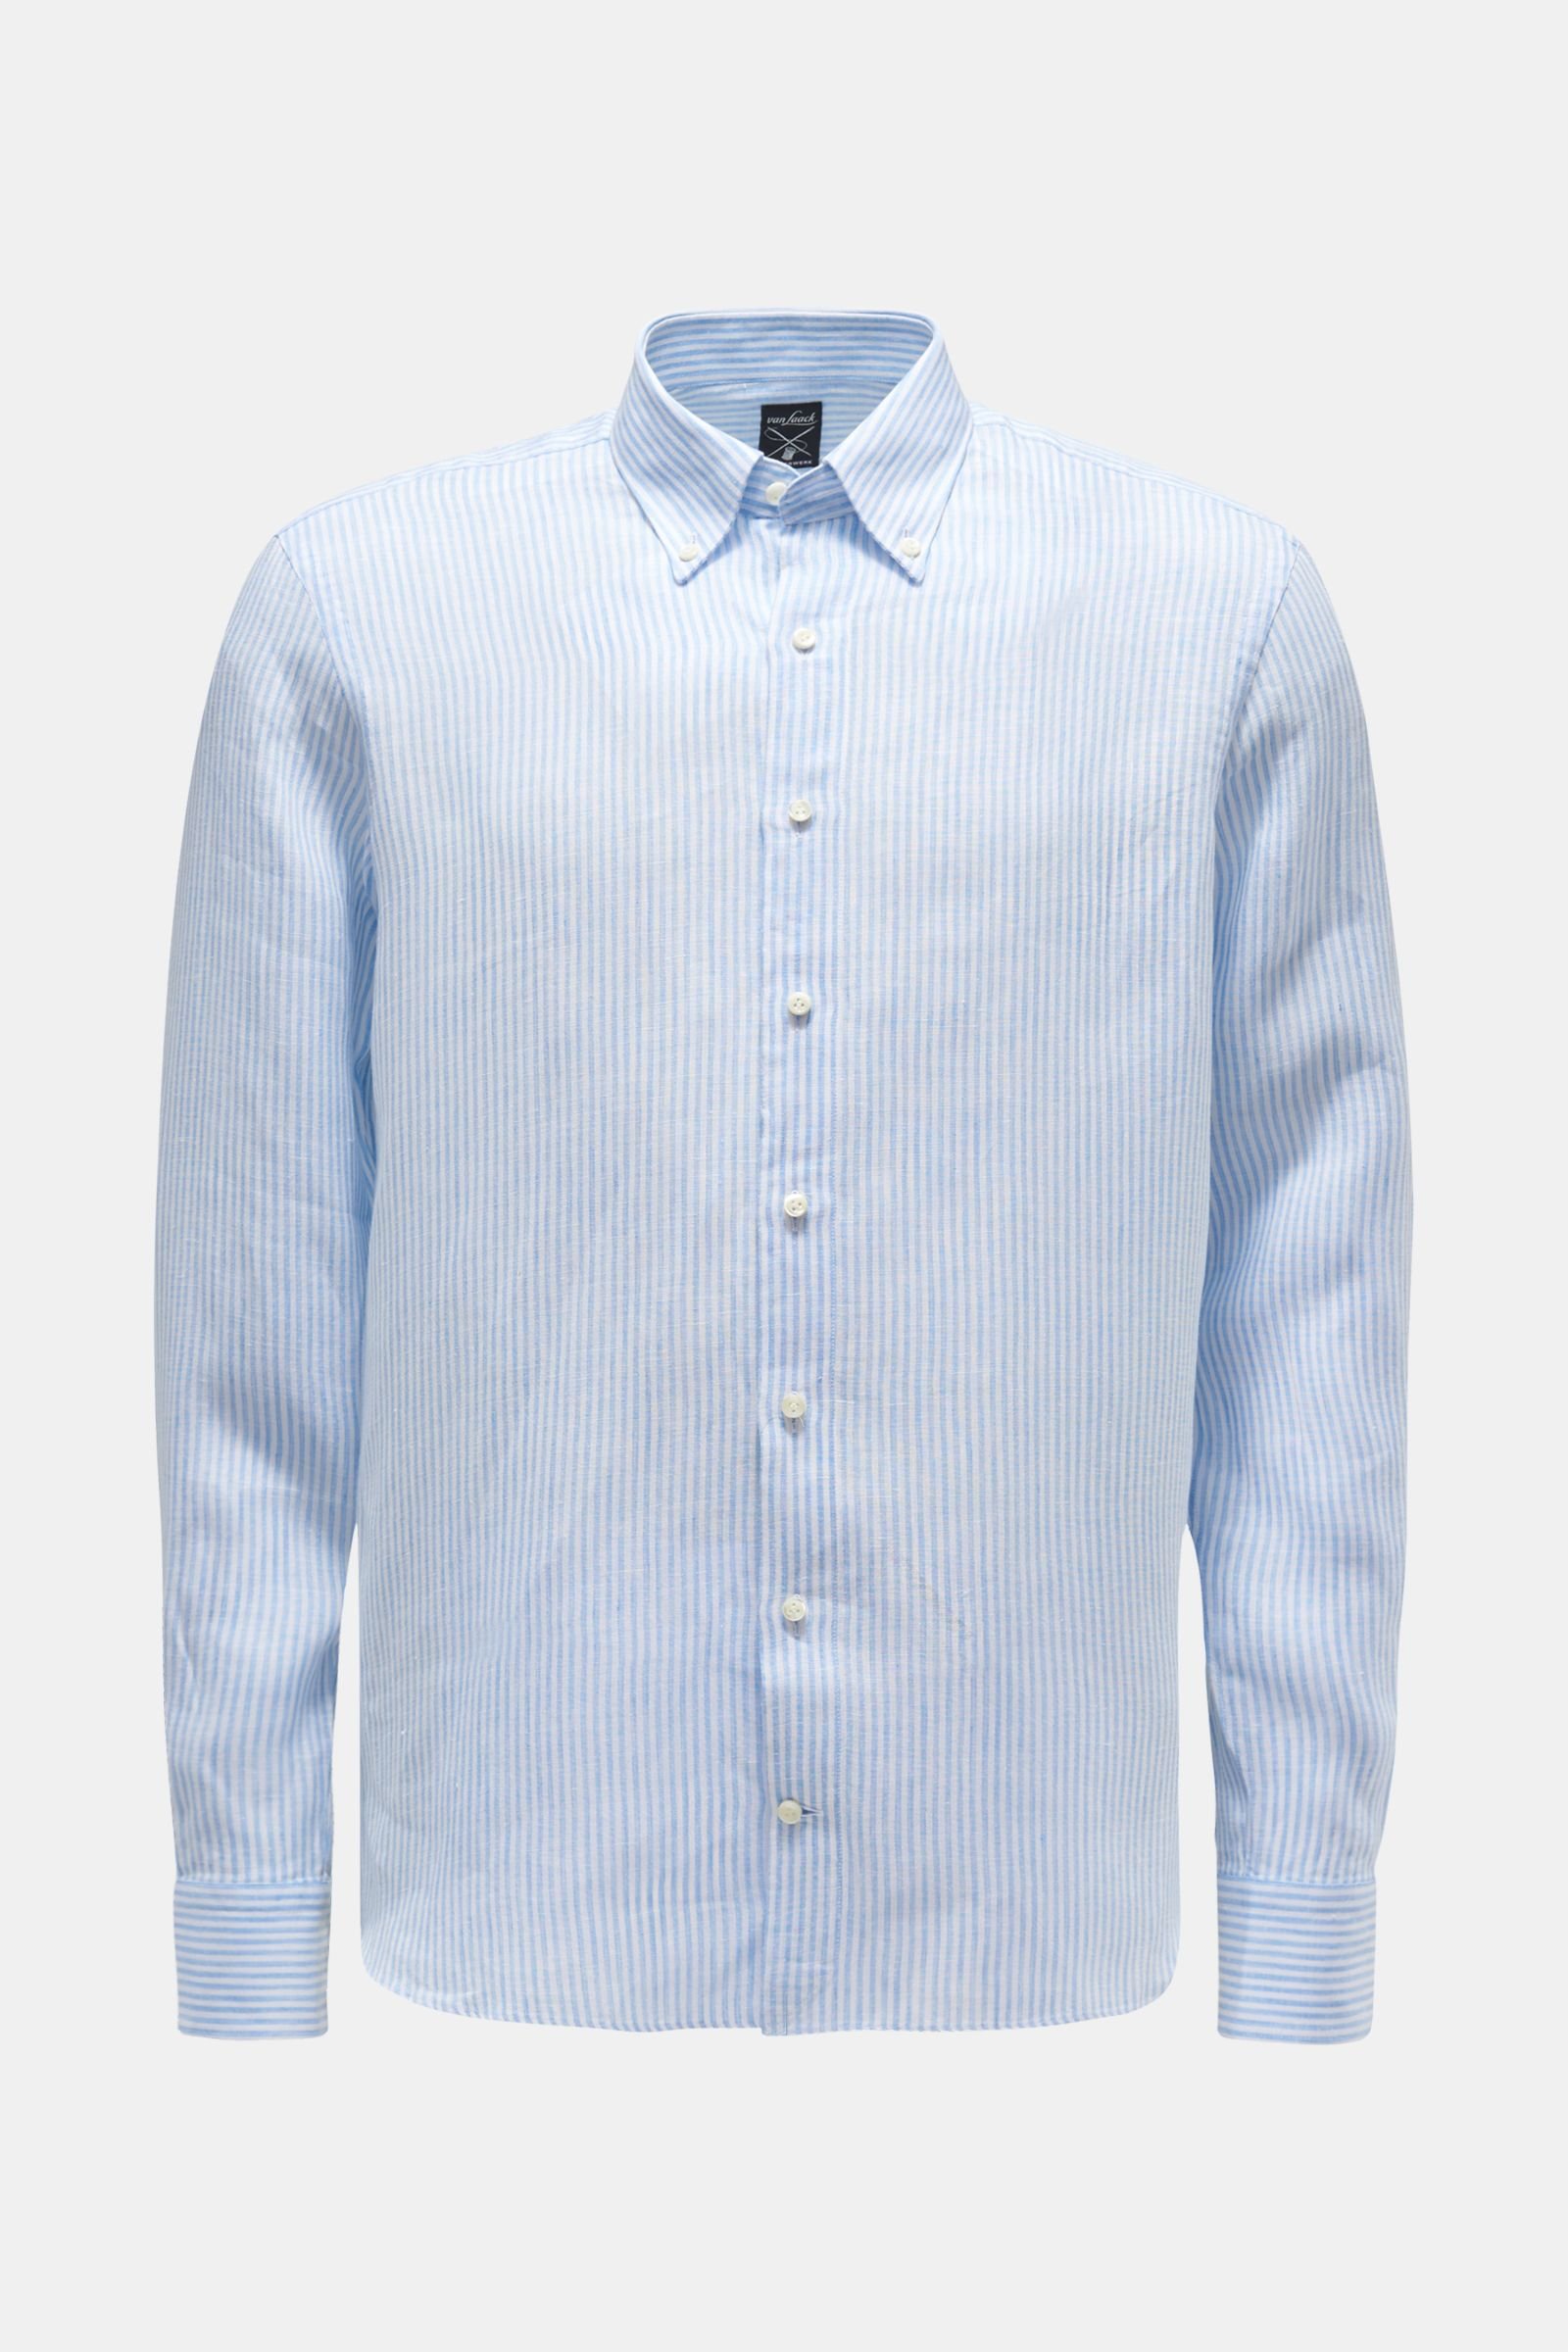 Linen shirt 'Malon-LTFW' button-down collar light blue/white striped